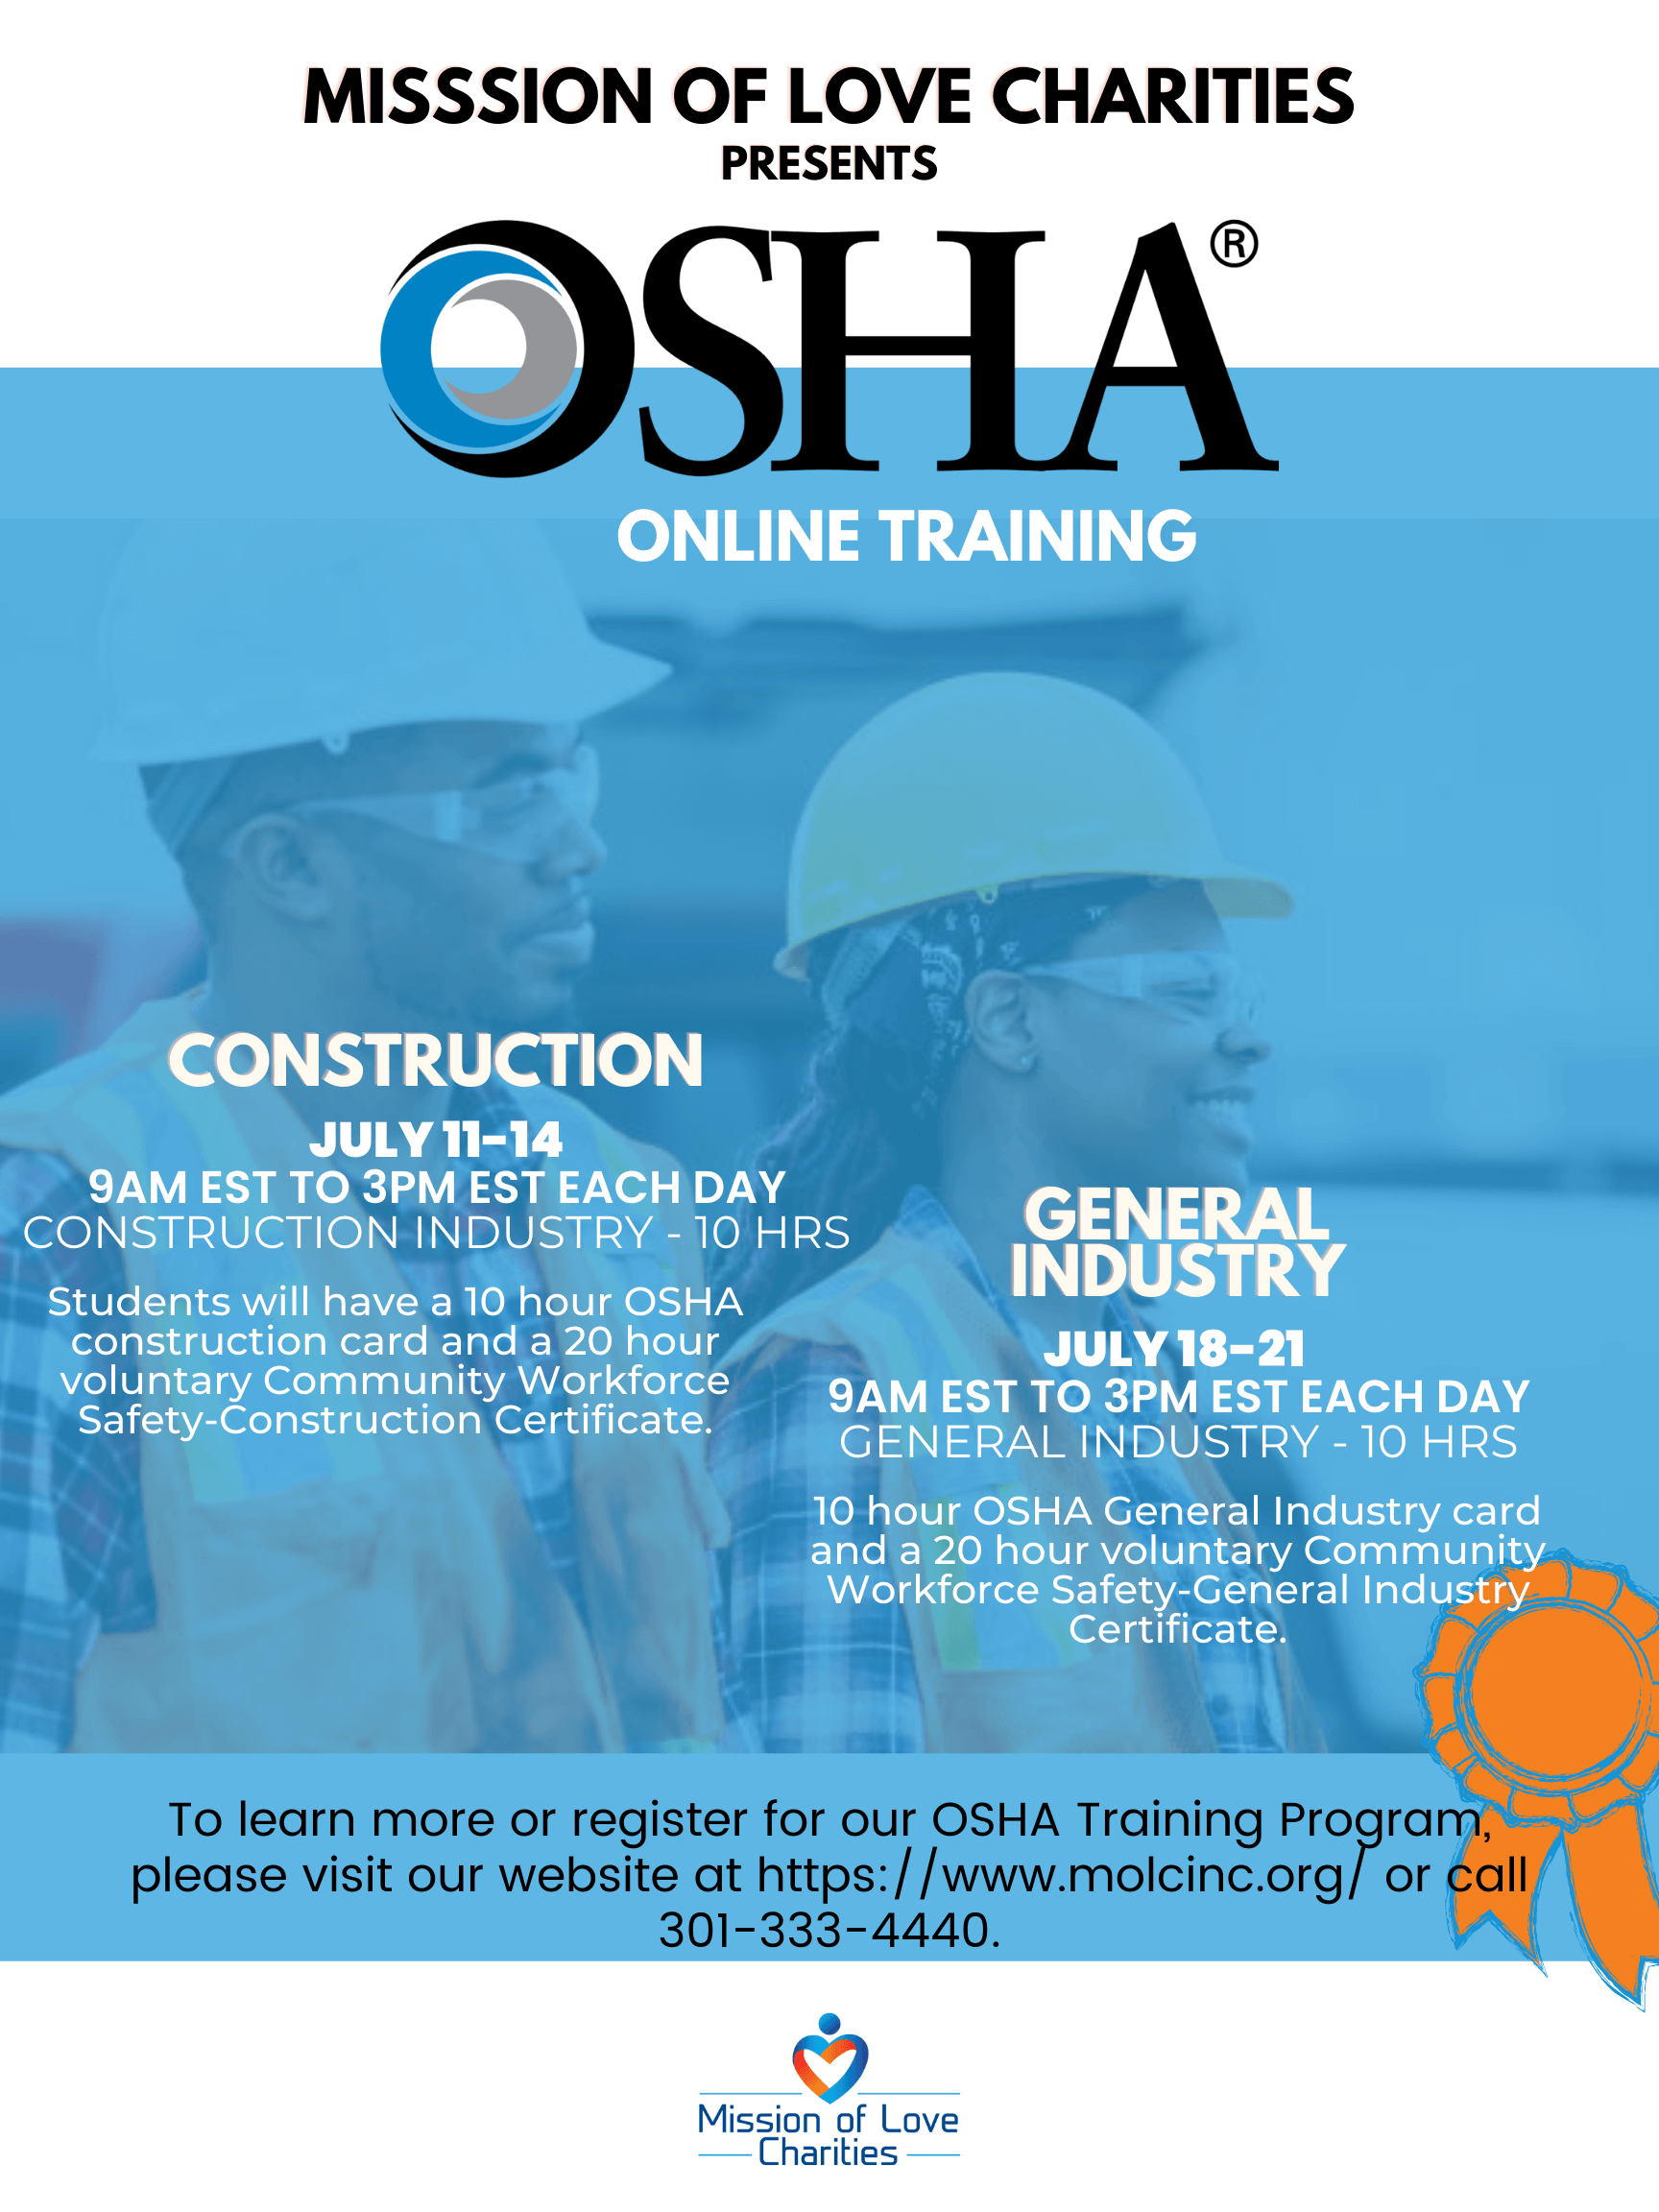 OSHA General Industry Training